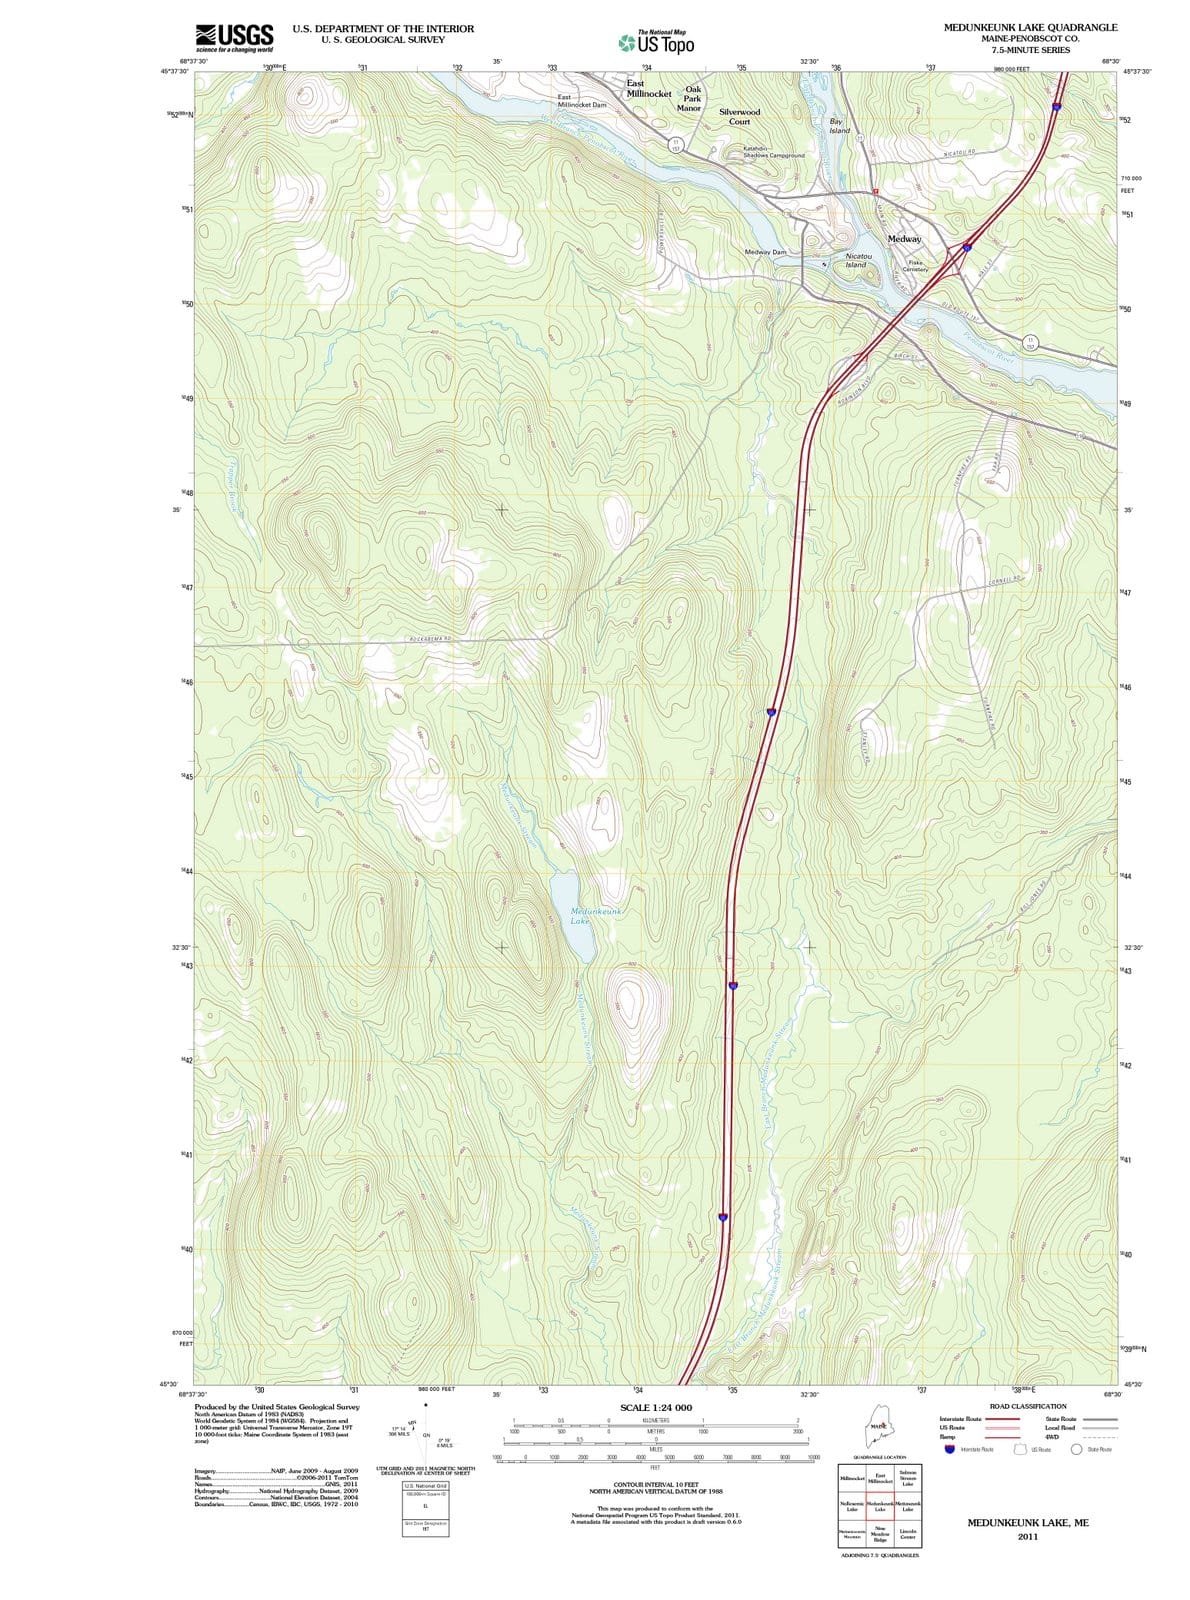 2011 Medunkeunk Lake, ME - Maine - USGS Topographic Map